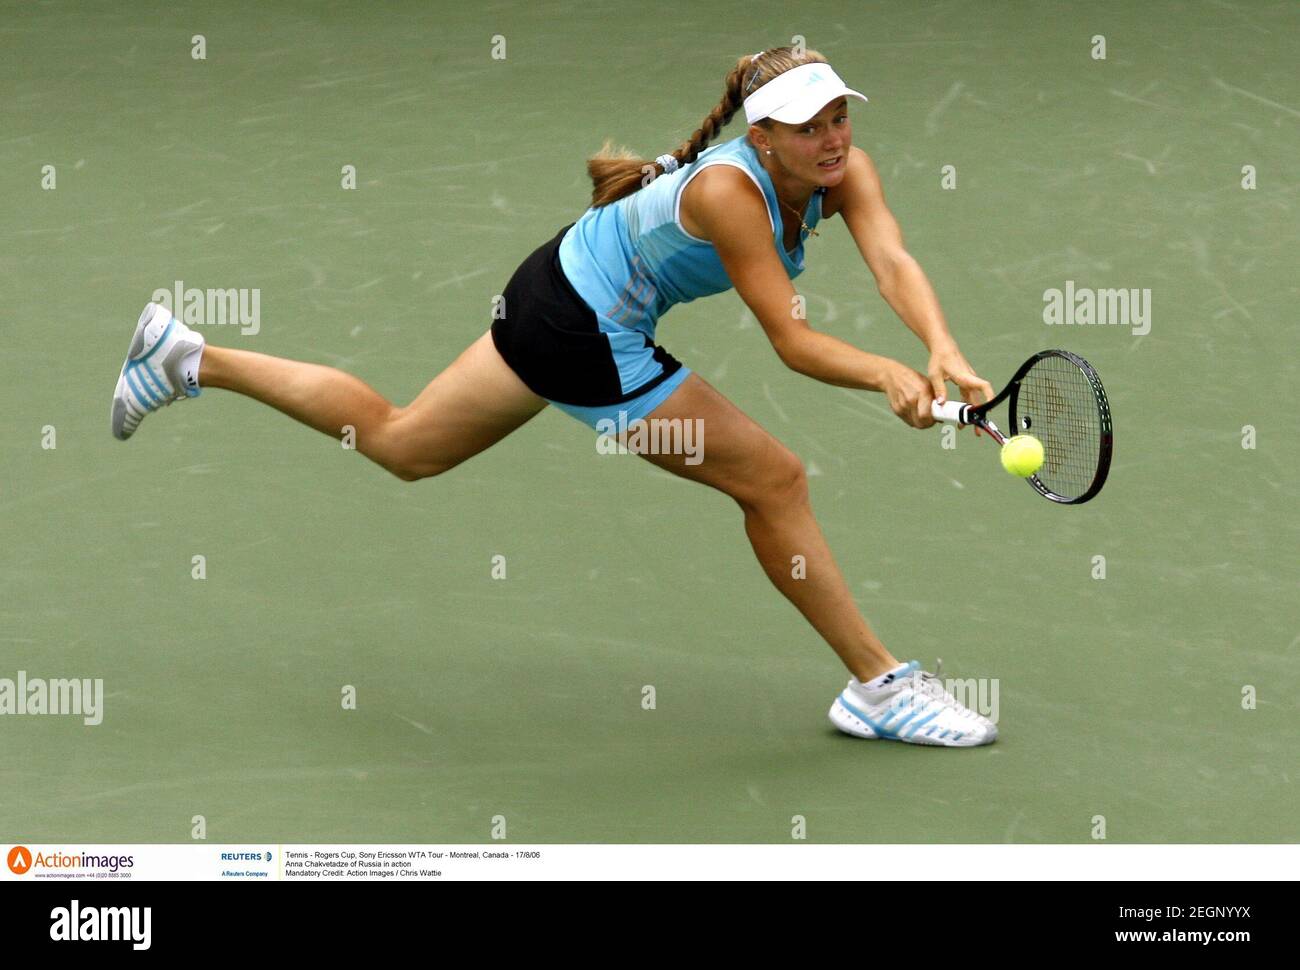 Tenis - Copa Rogers, Sony Ericsson WTA Tour - Montreal, Canadá - 17/8/06 Anna Chakvetadze de Rusia en acción crédito obligatorio: Acción Imágenes / Chris Wattie Foto de stock